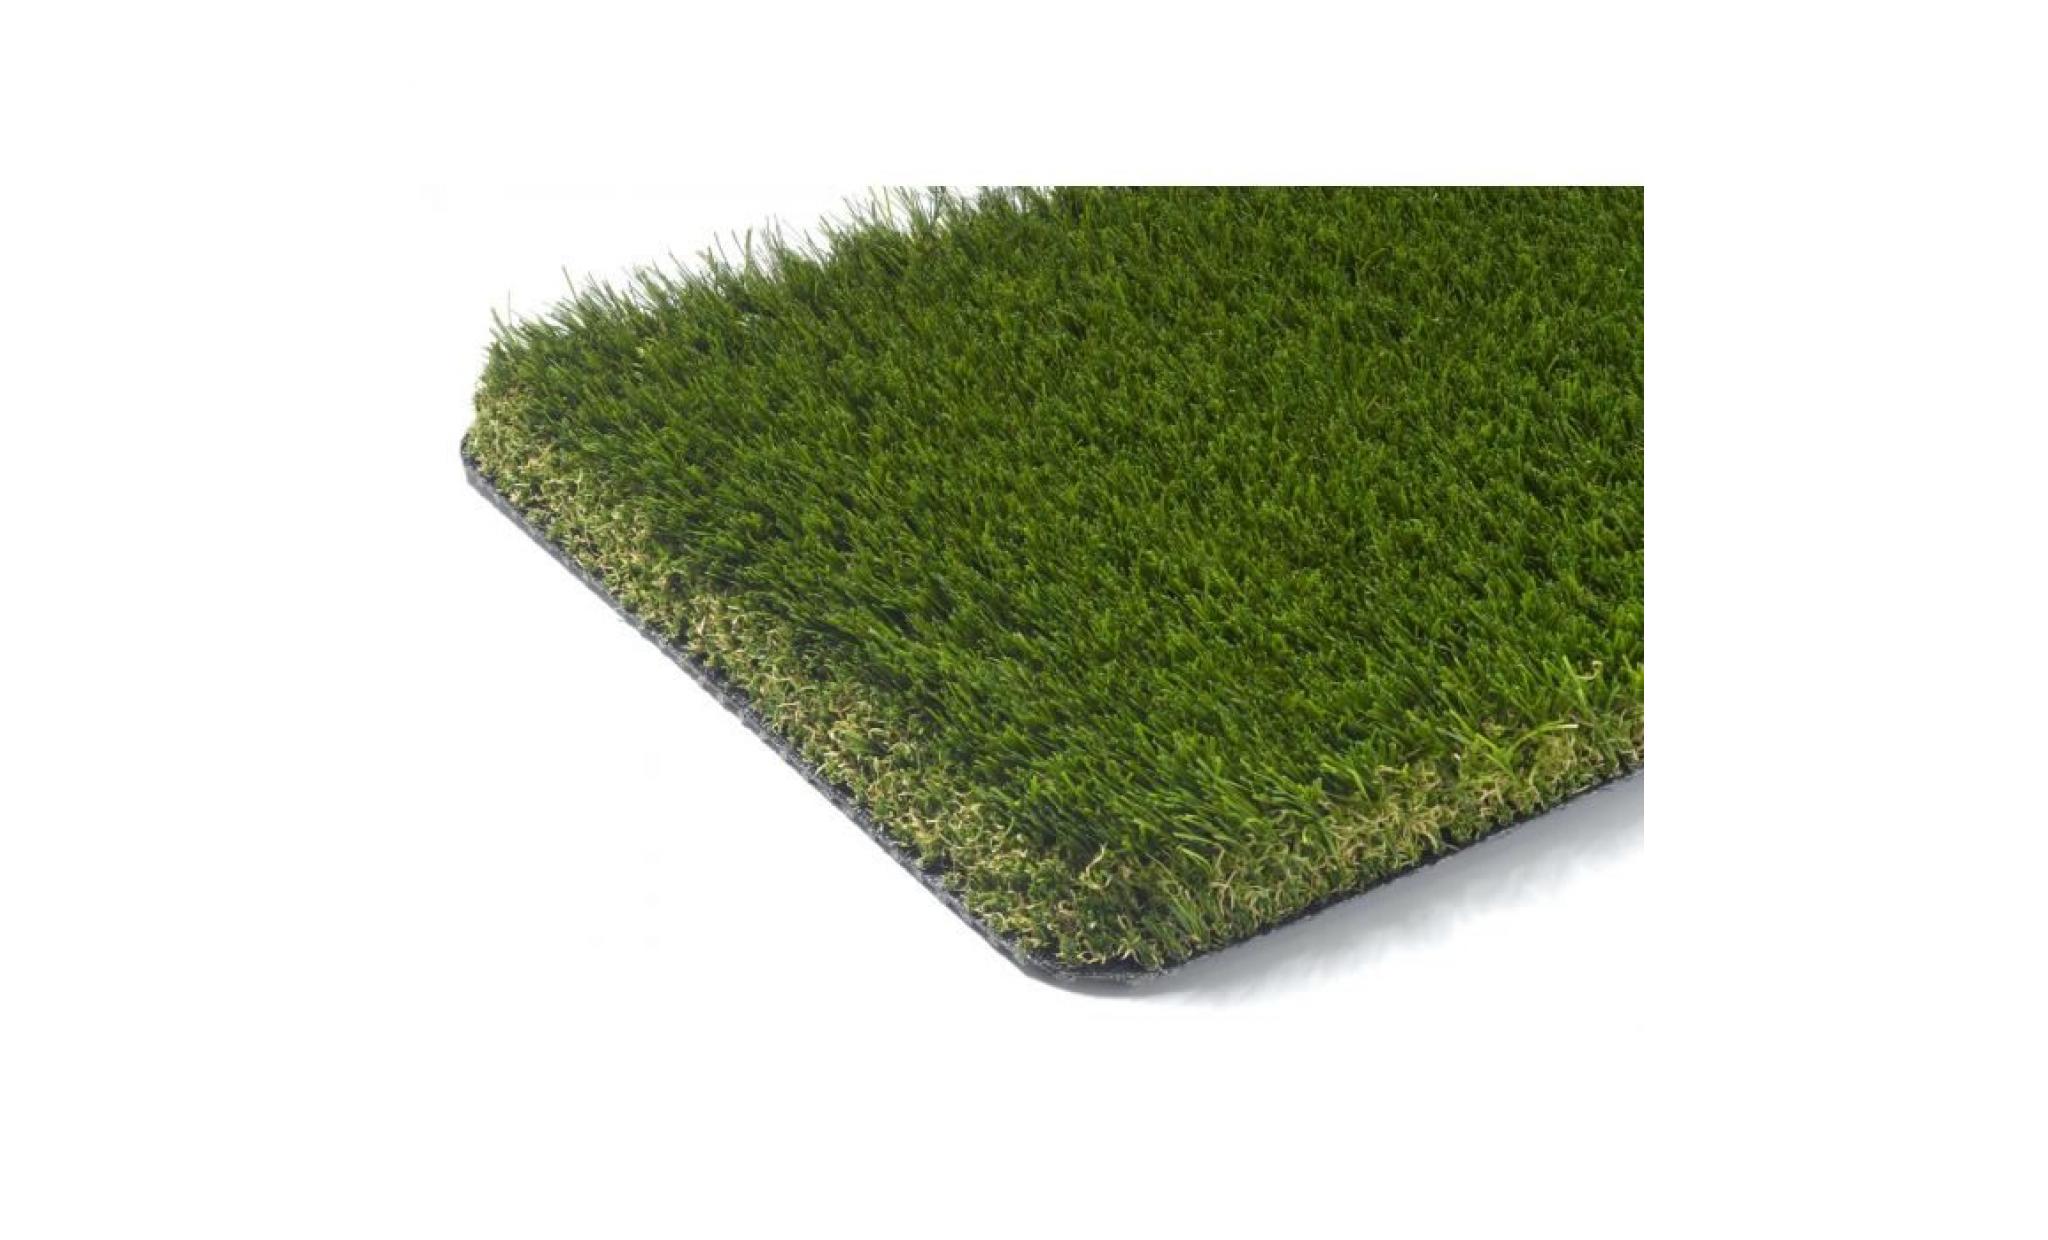 buckingham   tapis type luxe gazon artificiel – pour jardin, terrasse, balcon   vert  [200x500 cm]